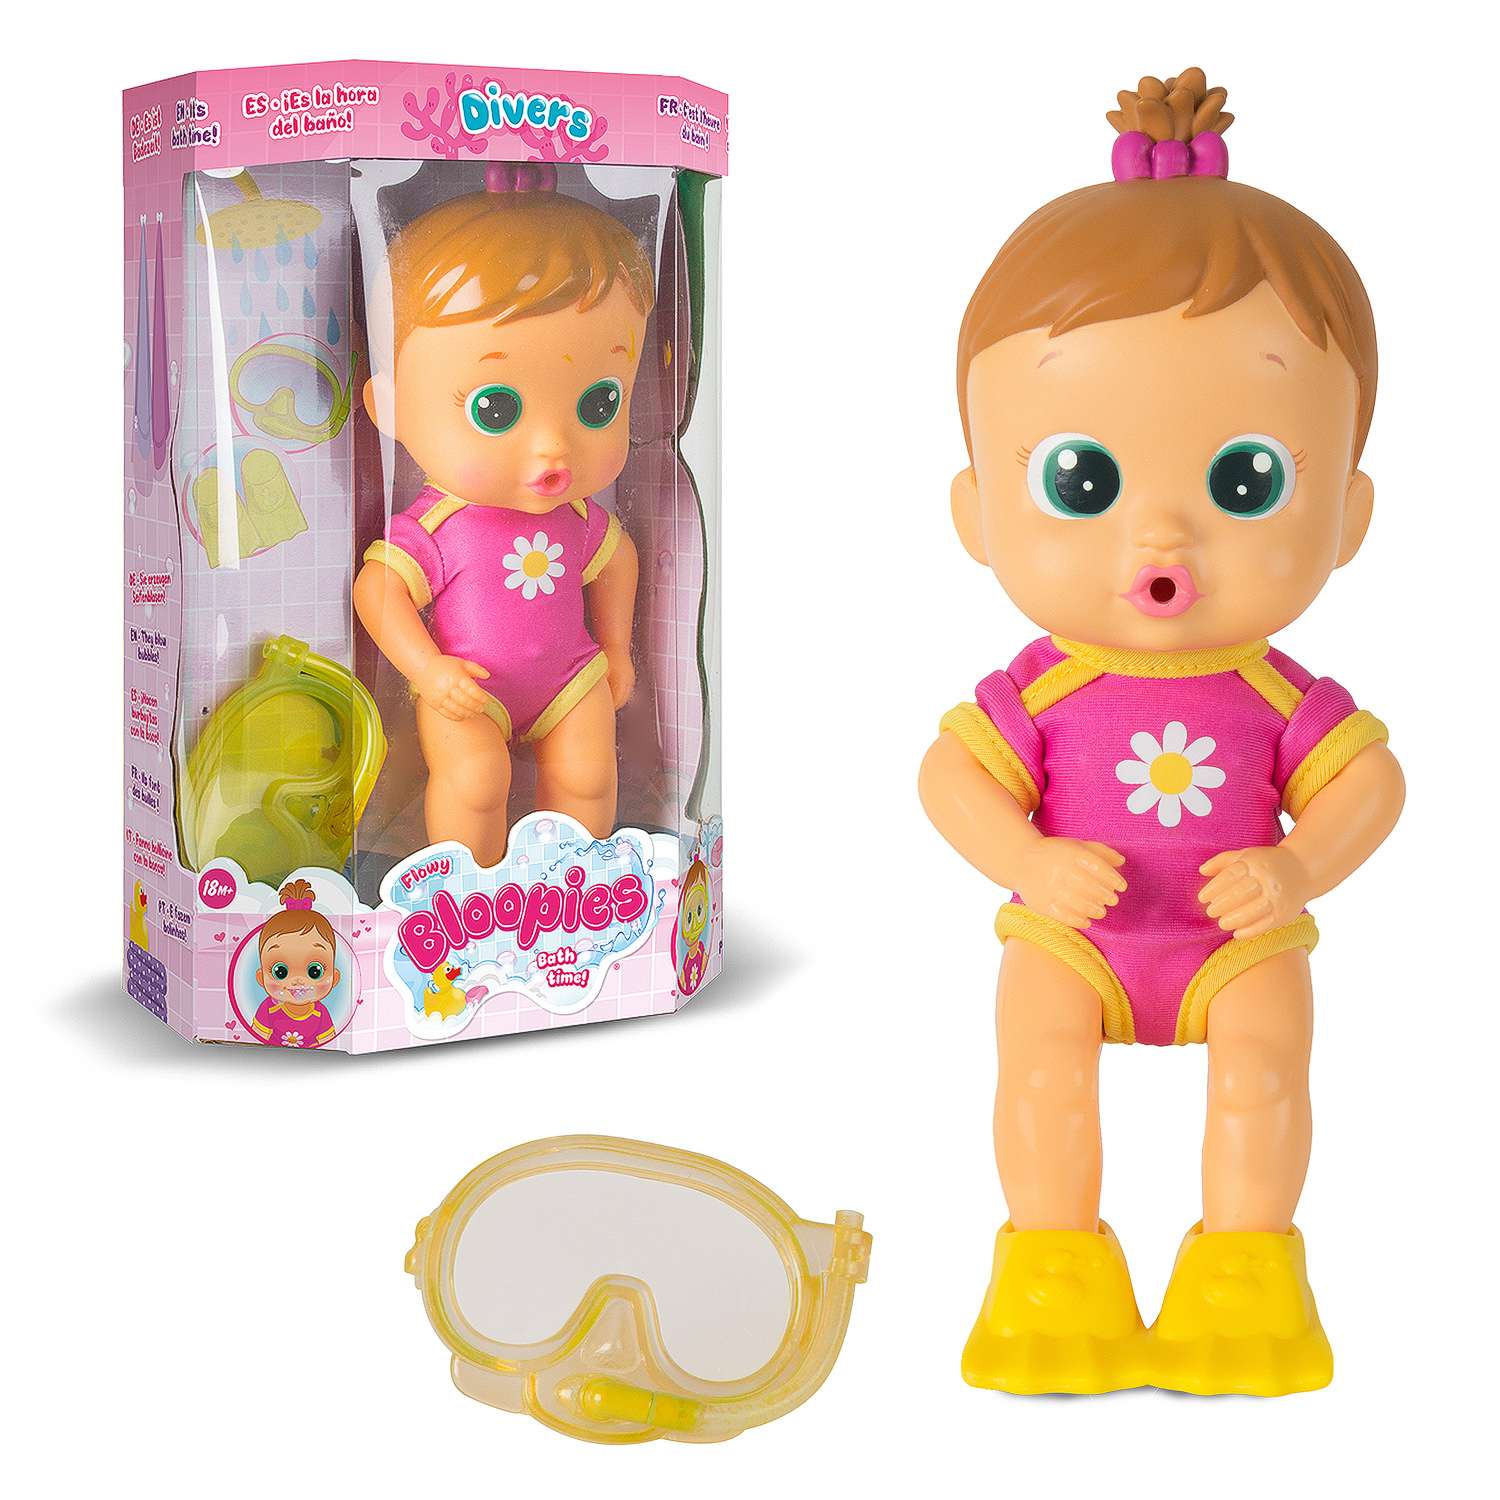 Кукла IMC Toys Bloopies для купания Flowy 24 см 95601 - фото 2